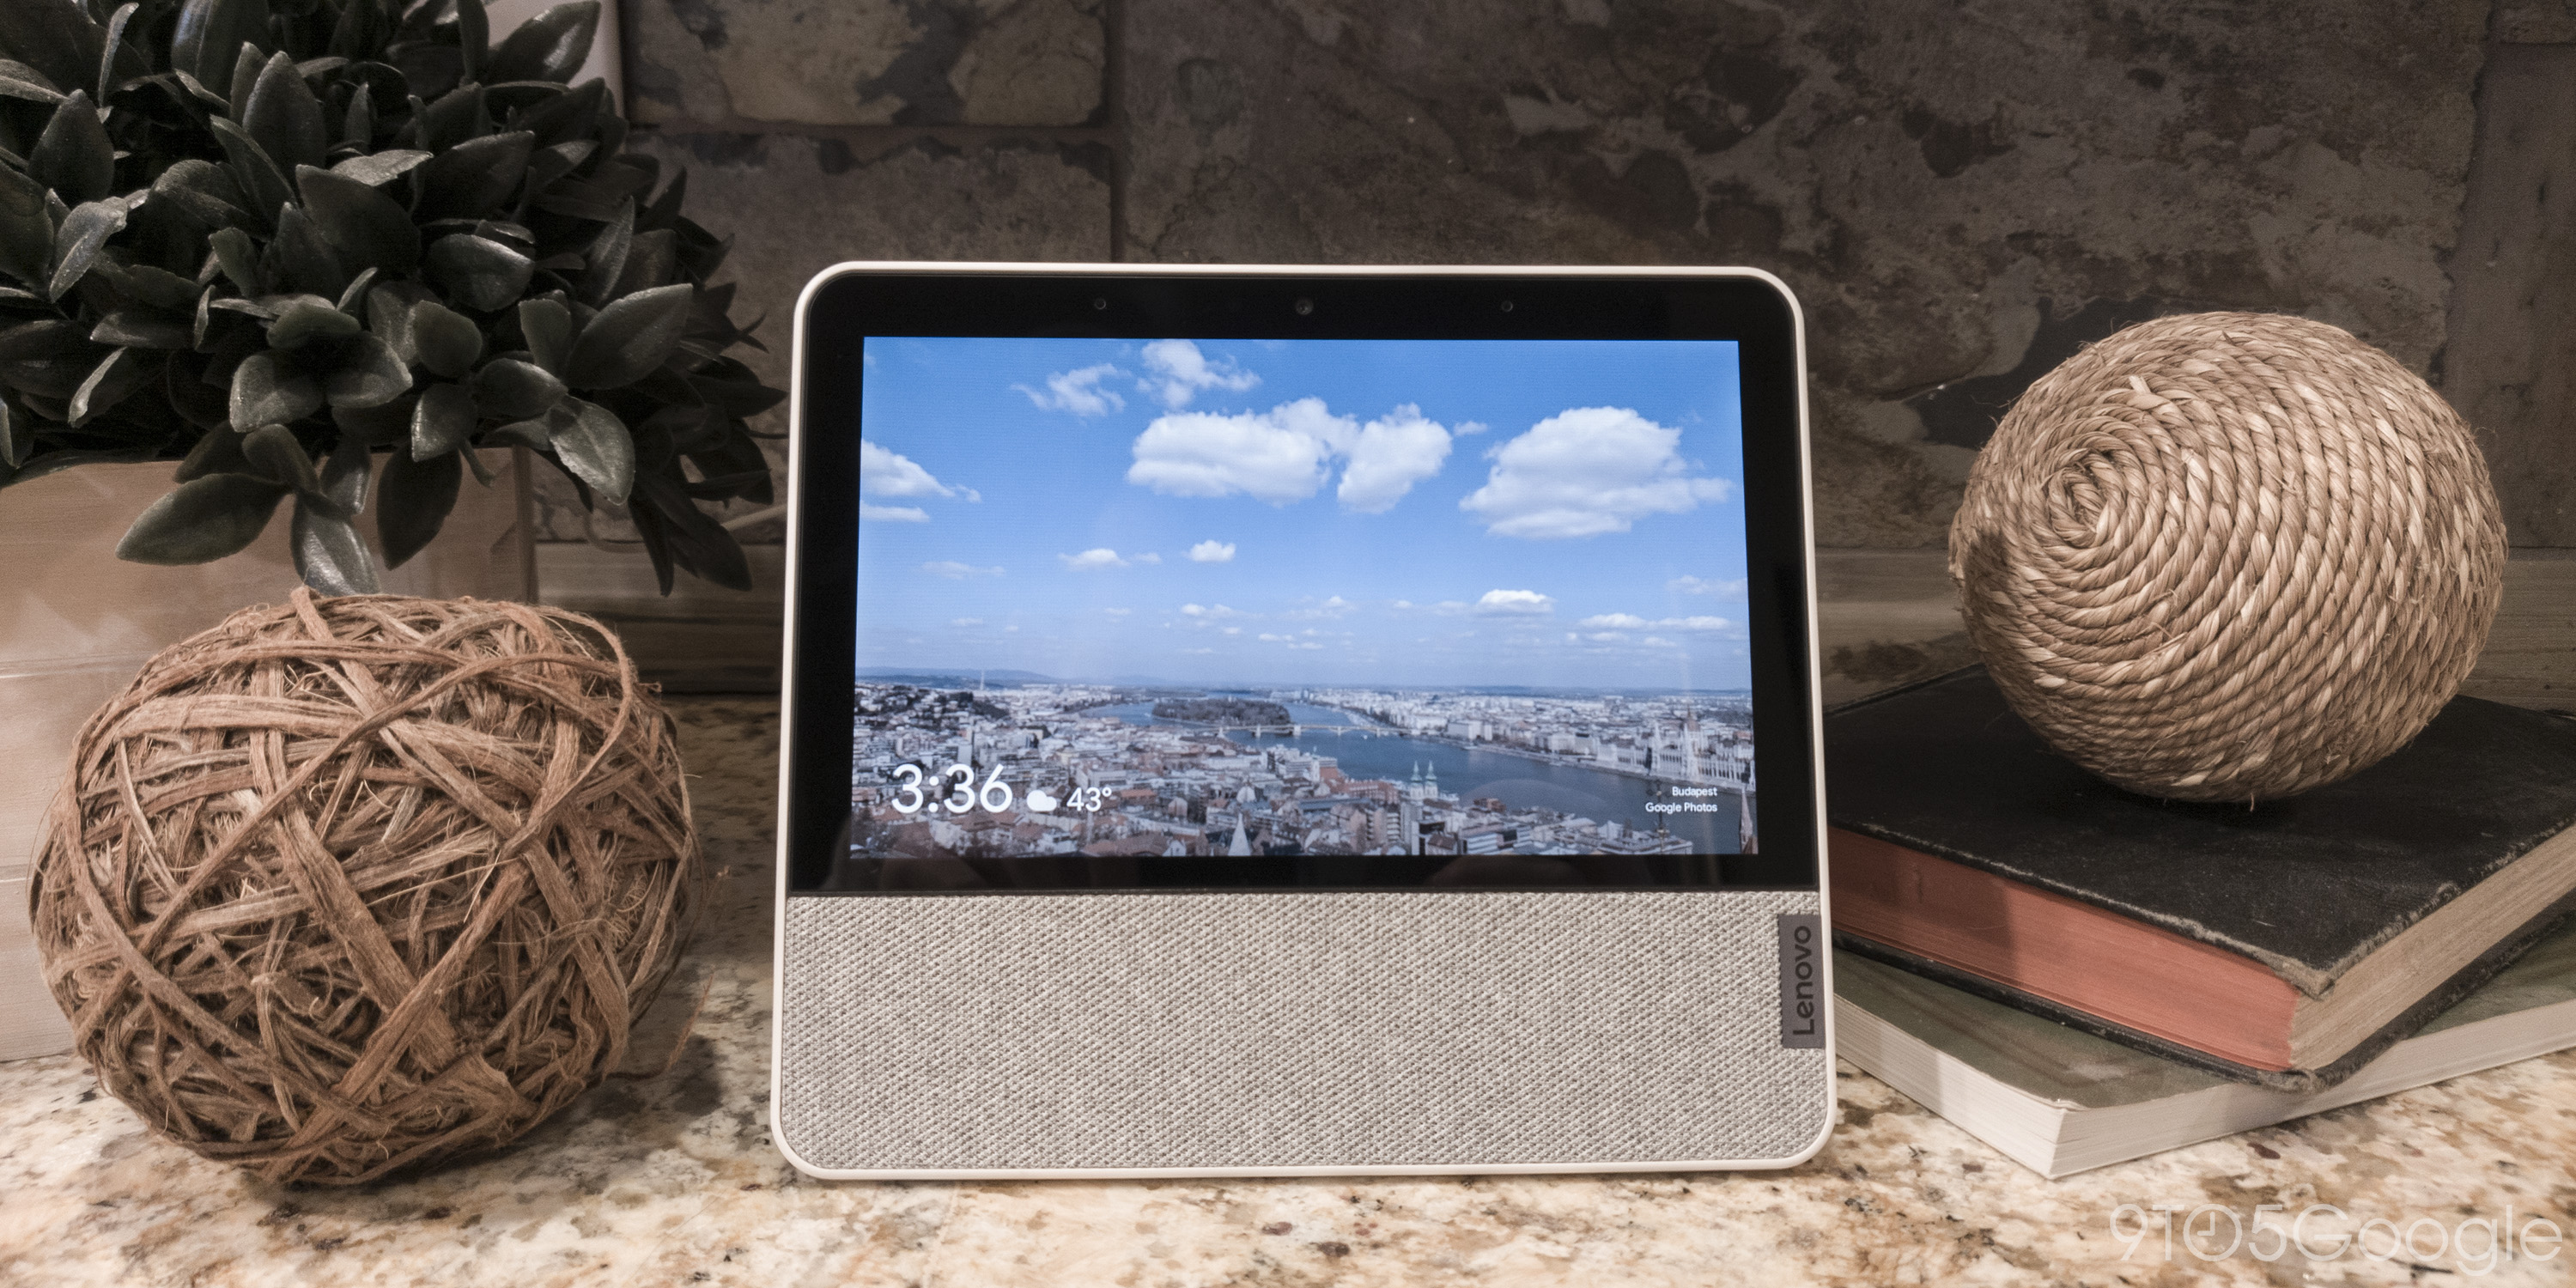 lenovo smart display speakers